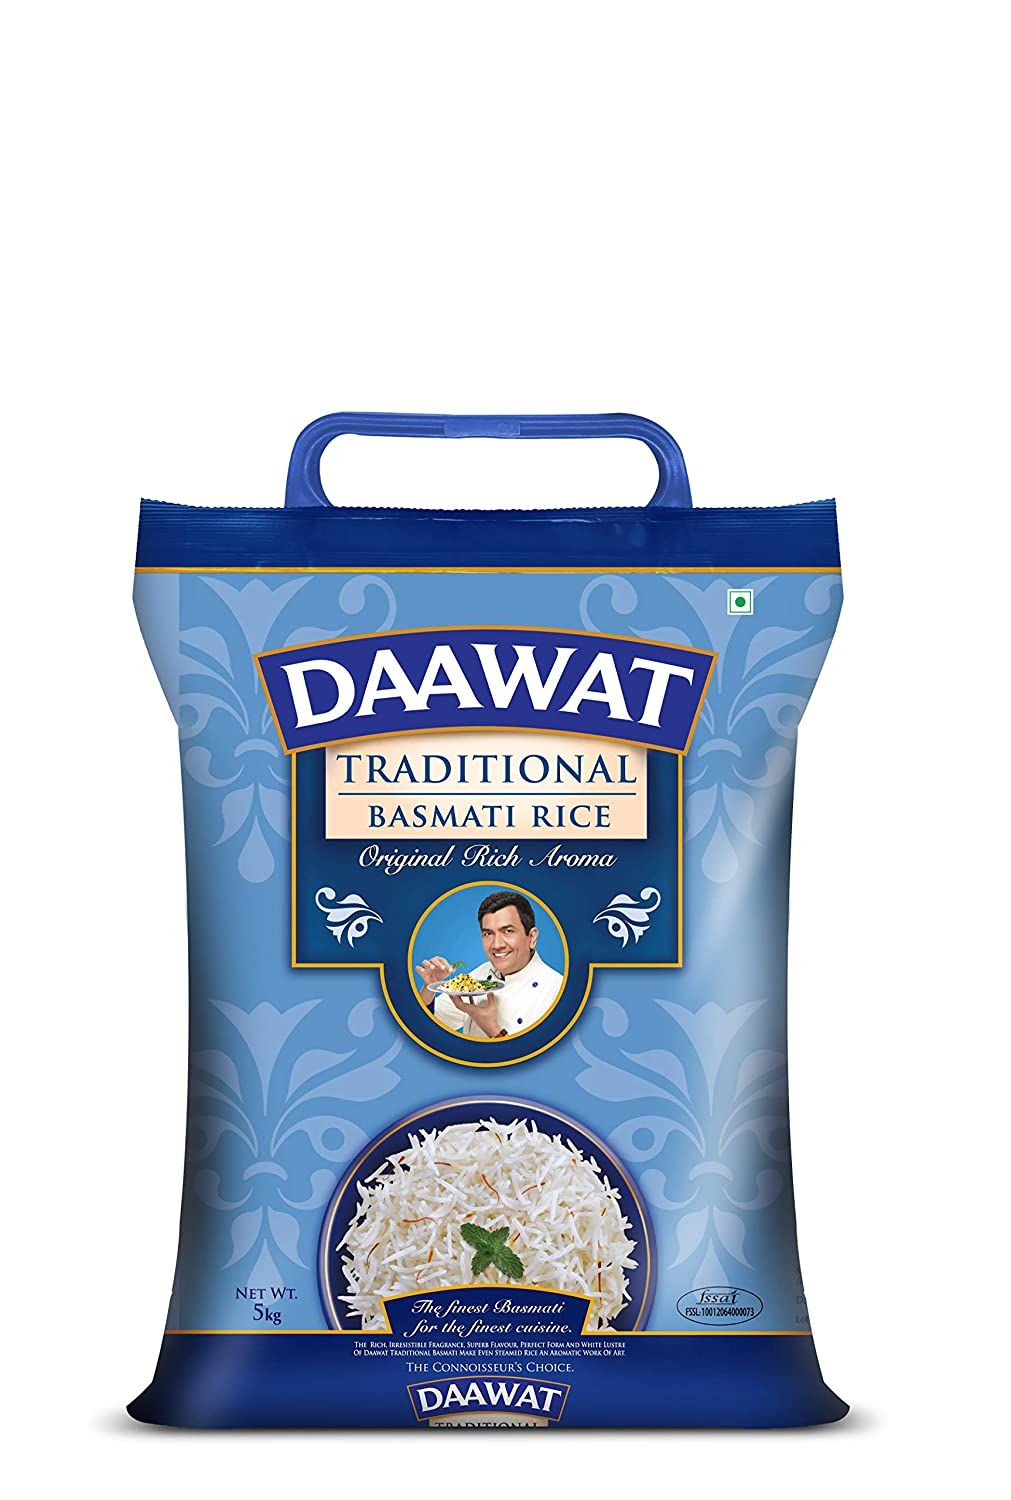 Daawat Traditional Basmati Rice Image